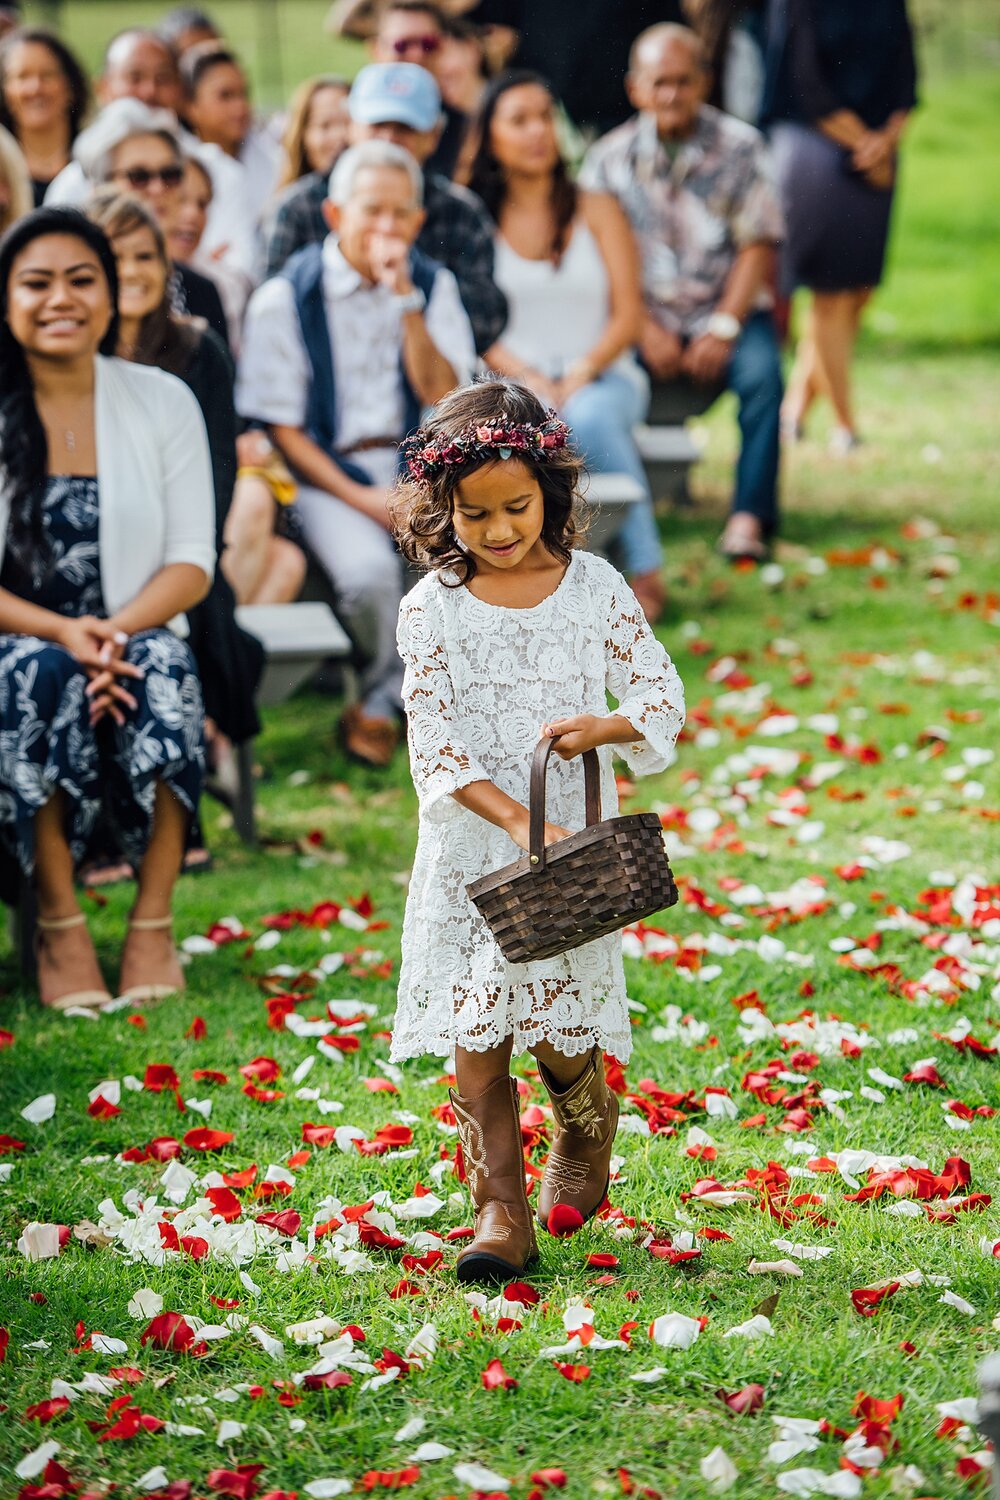 flower girl spreading petals on the wedding aisle